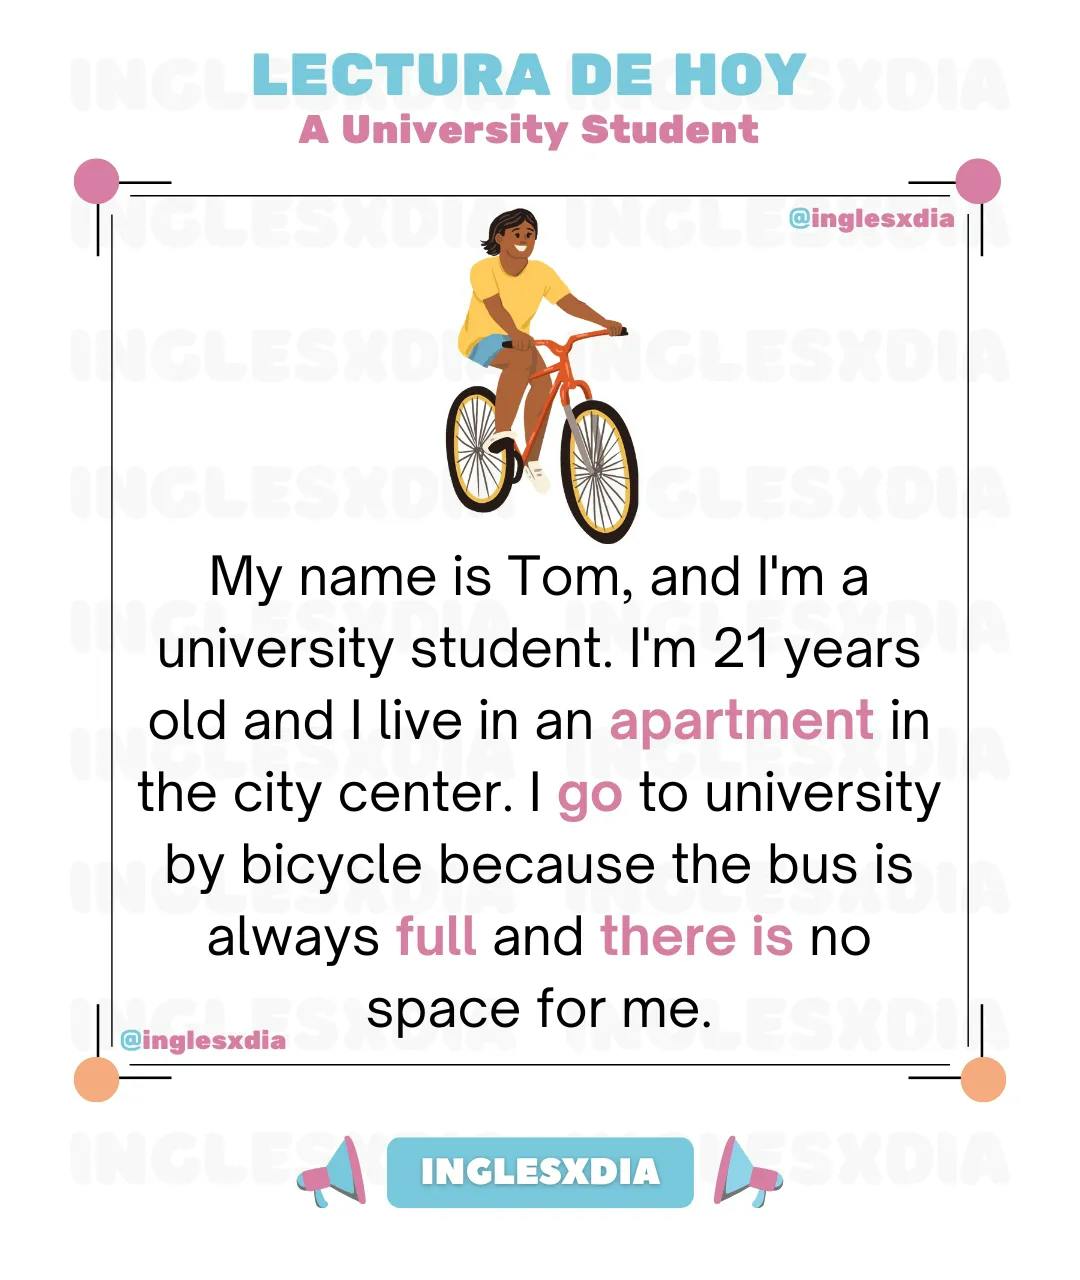 A University Student